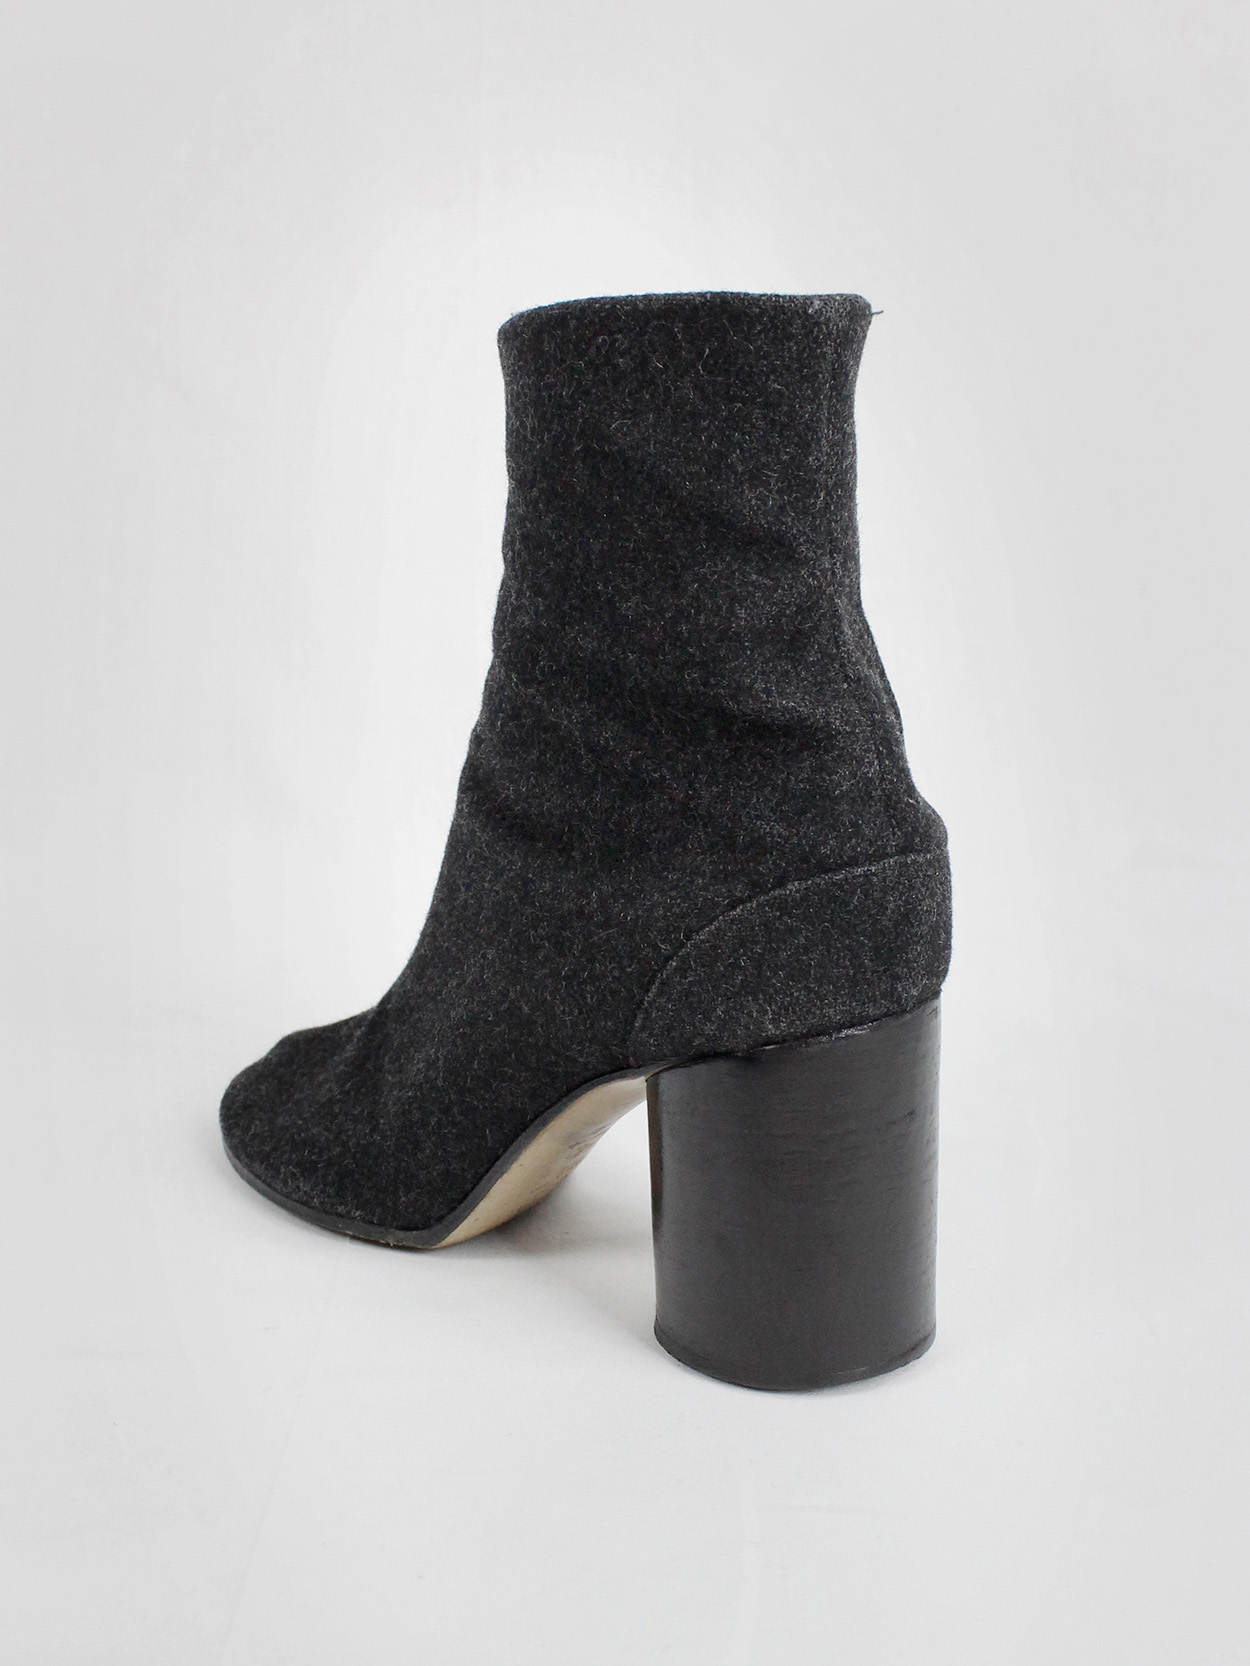 Maison Martin Margiela grey felt tabi boots with cylindrical heel 1990s 90s (9)